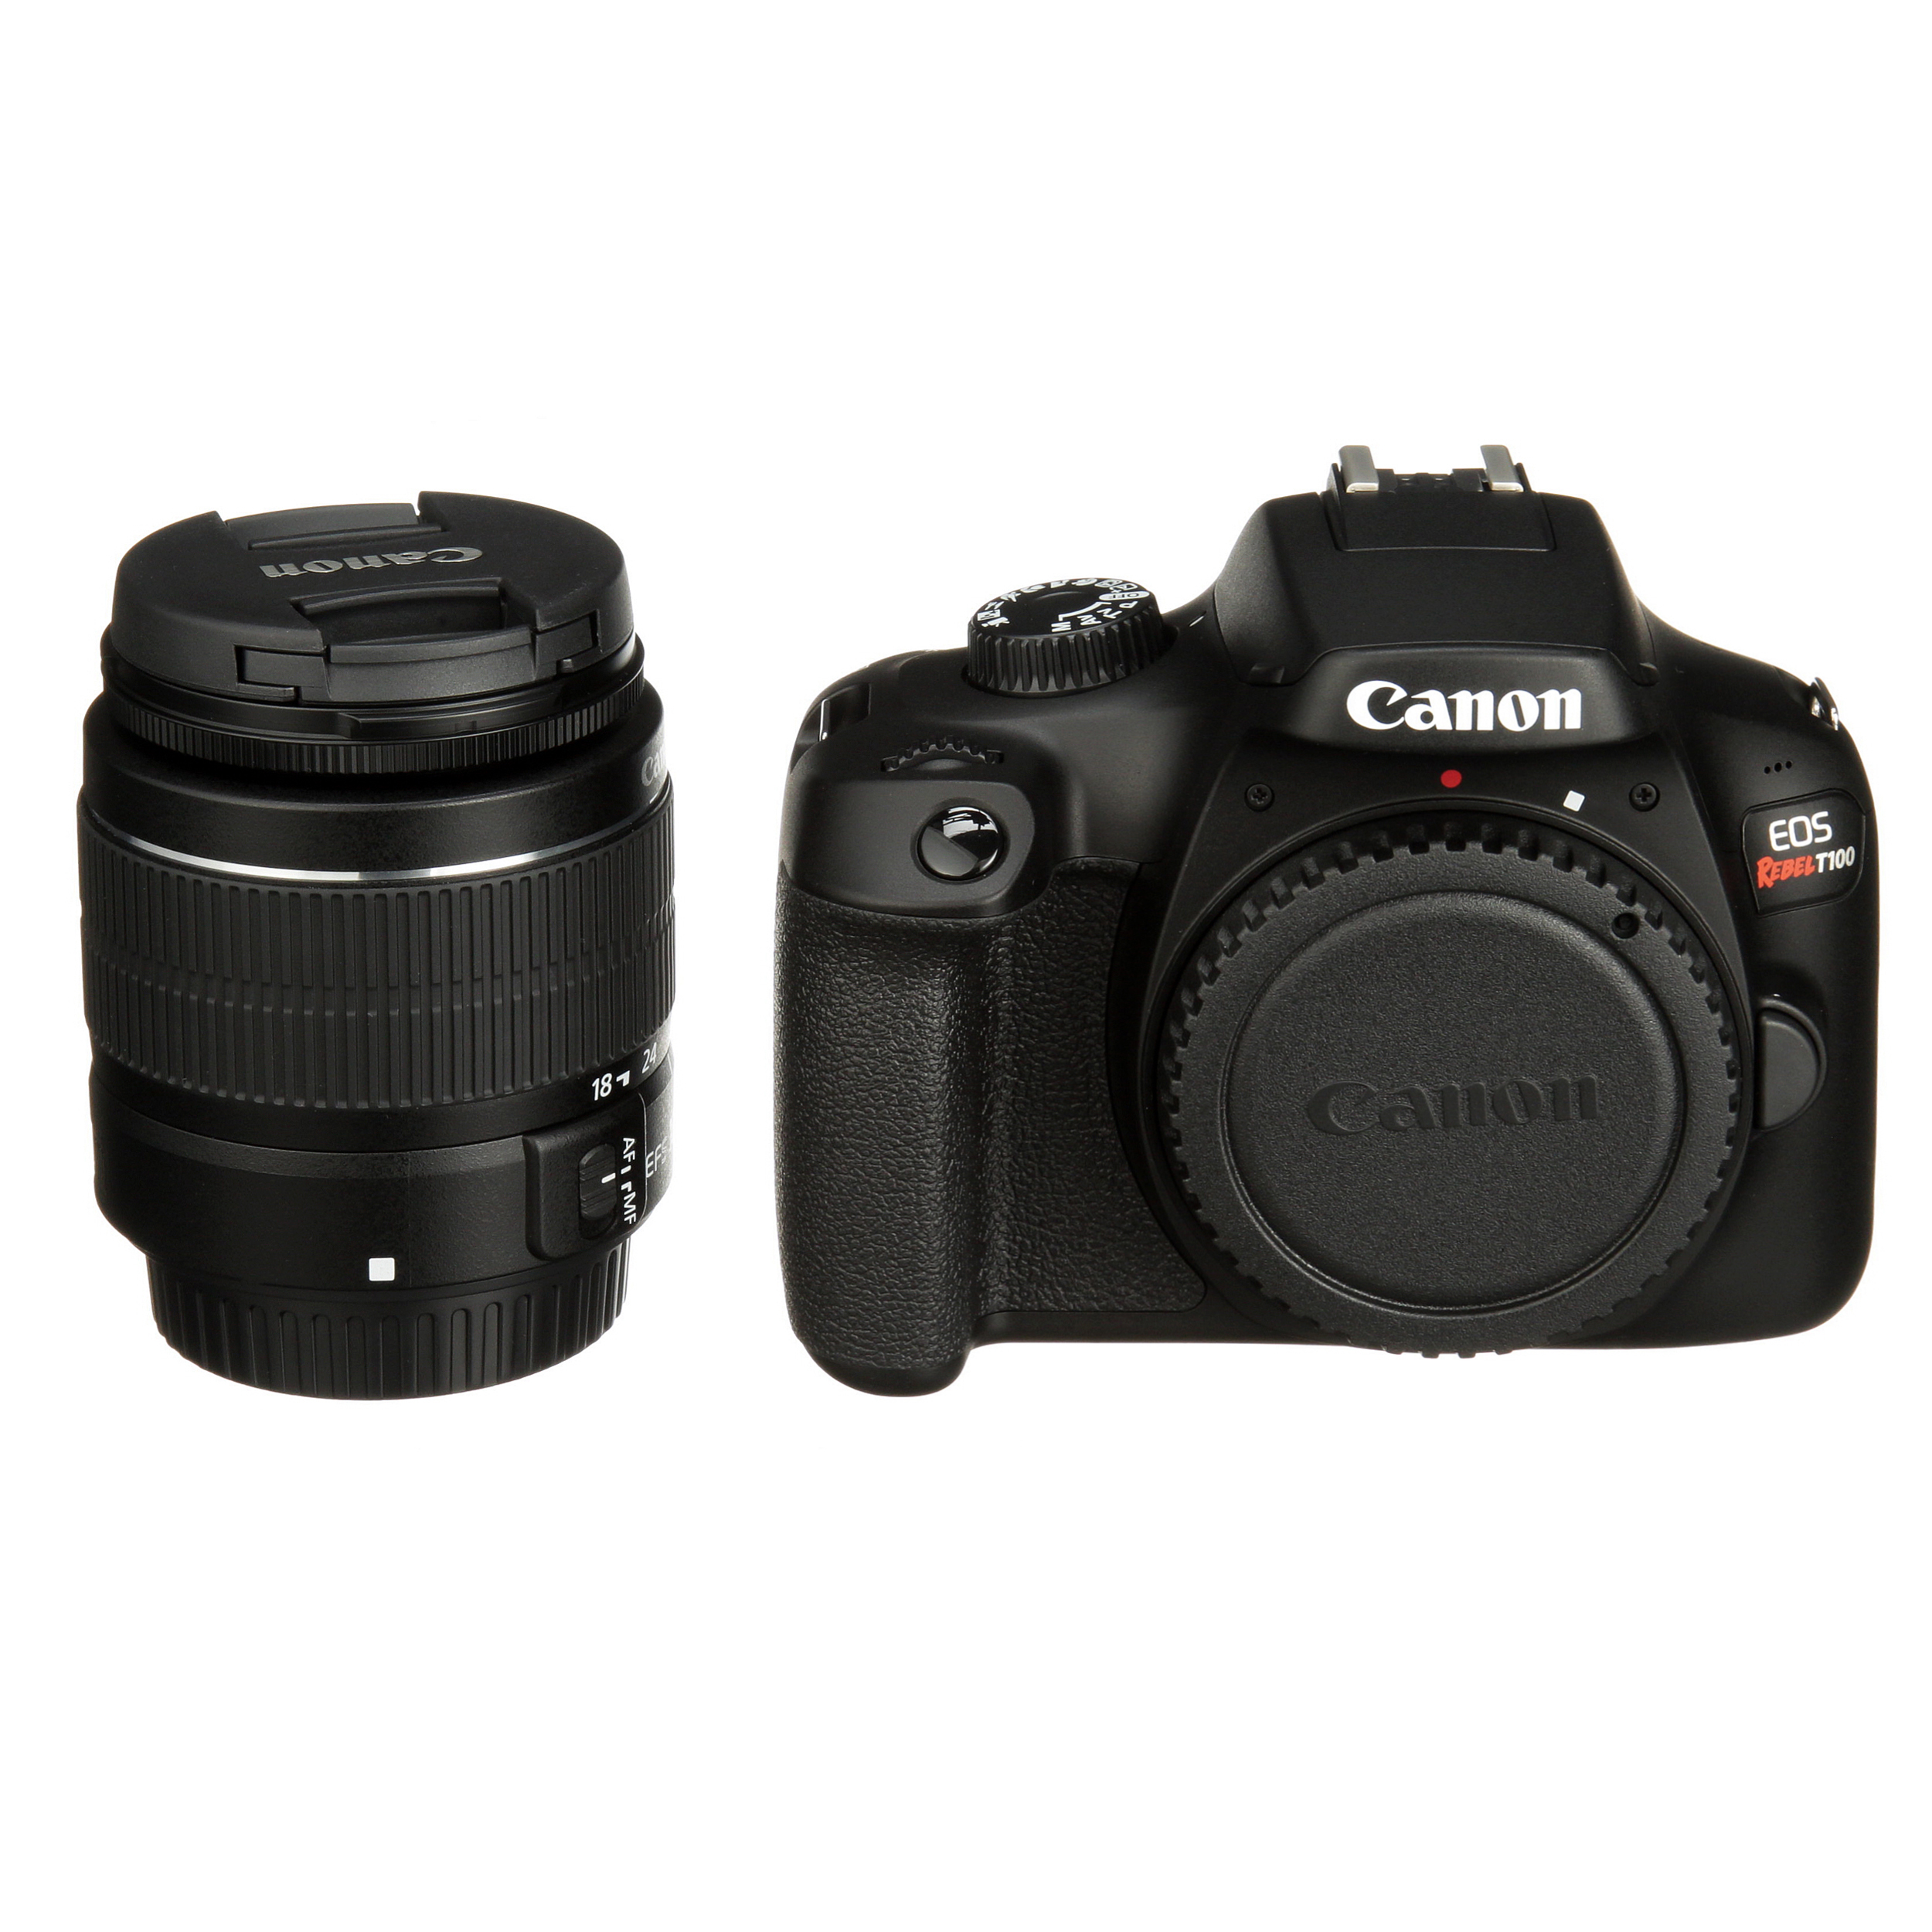 Canon EOS Rebel T100 Digital SLR Camera with 18-55mm Lens Kit, 18 Megapixel Sensor, Wi-Fi, DIGIC4+, SanDisk 32GB Memory Card and Live View Shooting - image 2 of 8